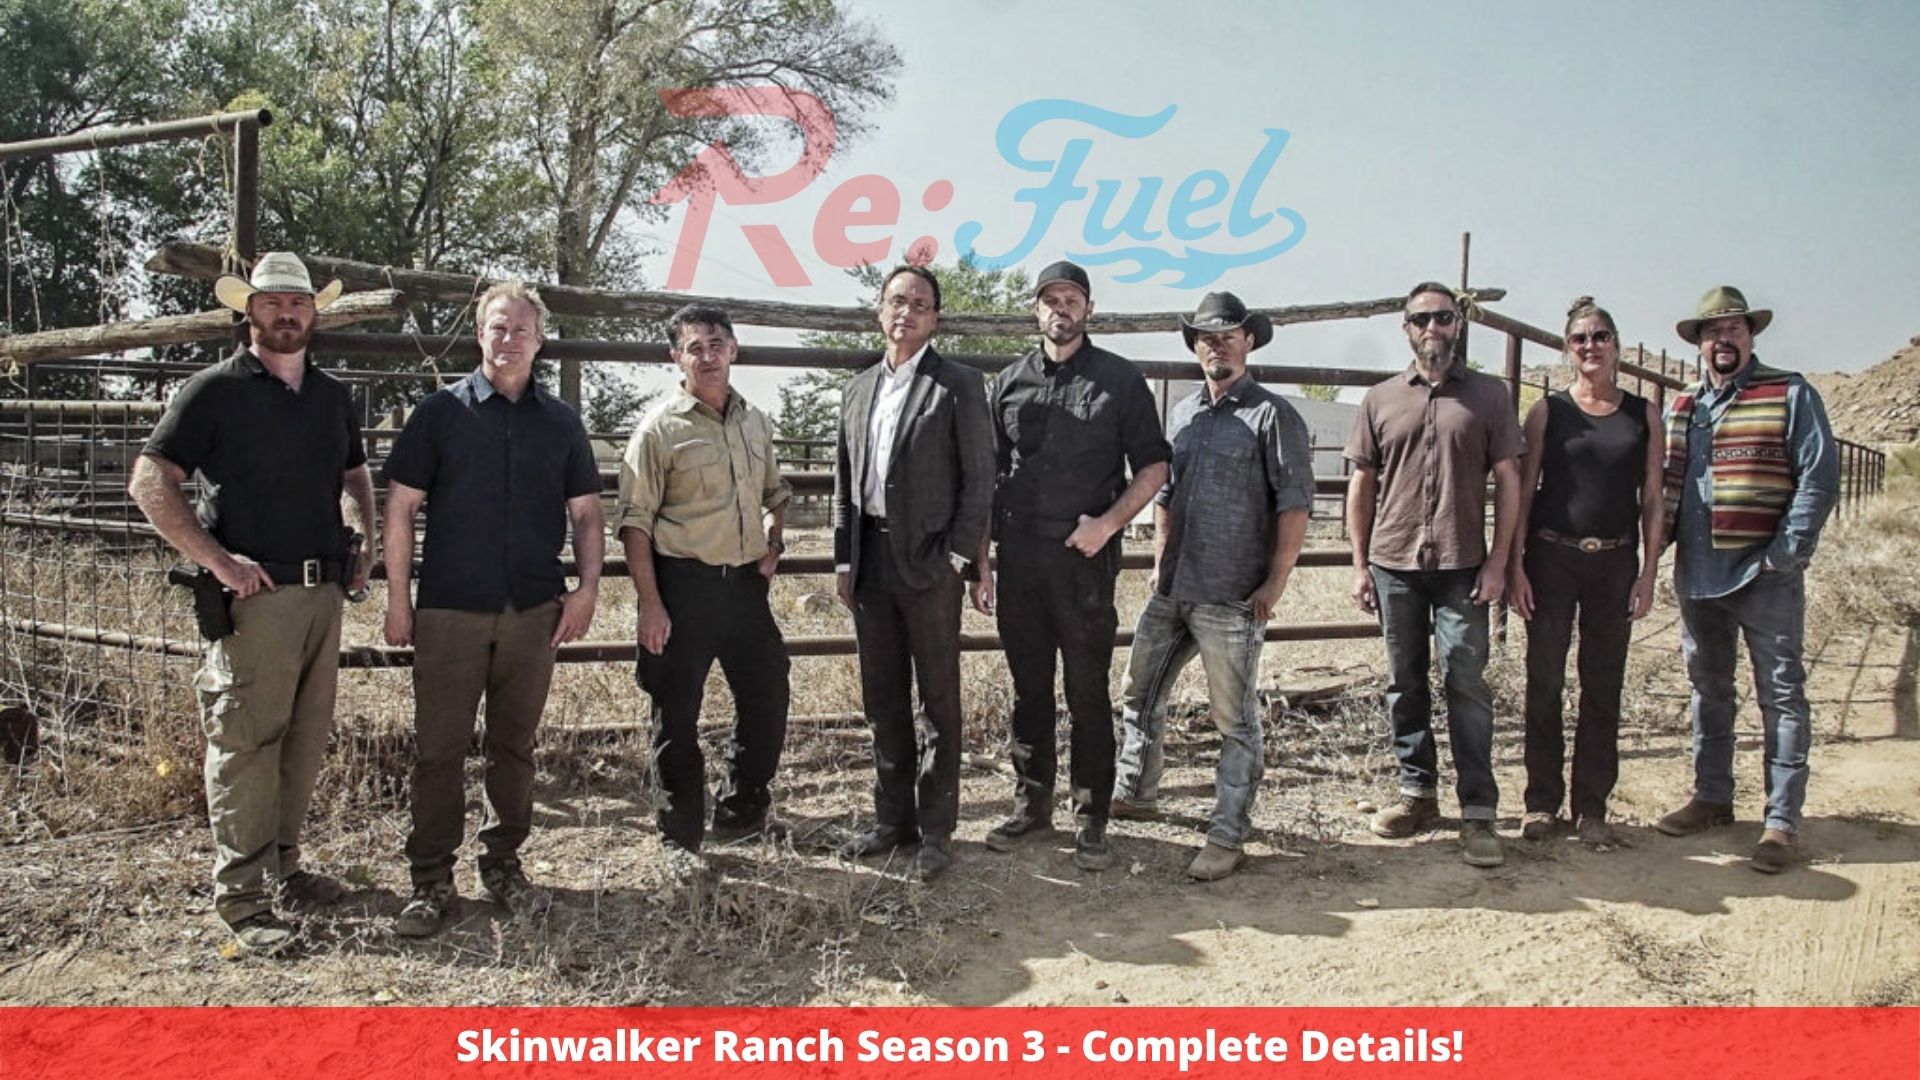 Skinwalker Ranch Season 3 - Complete Details!